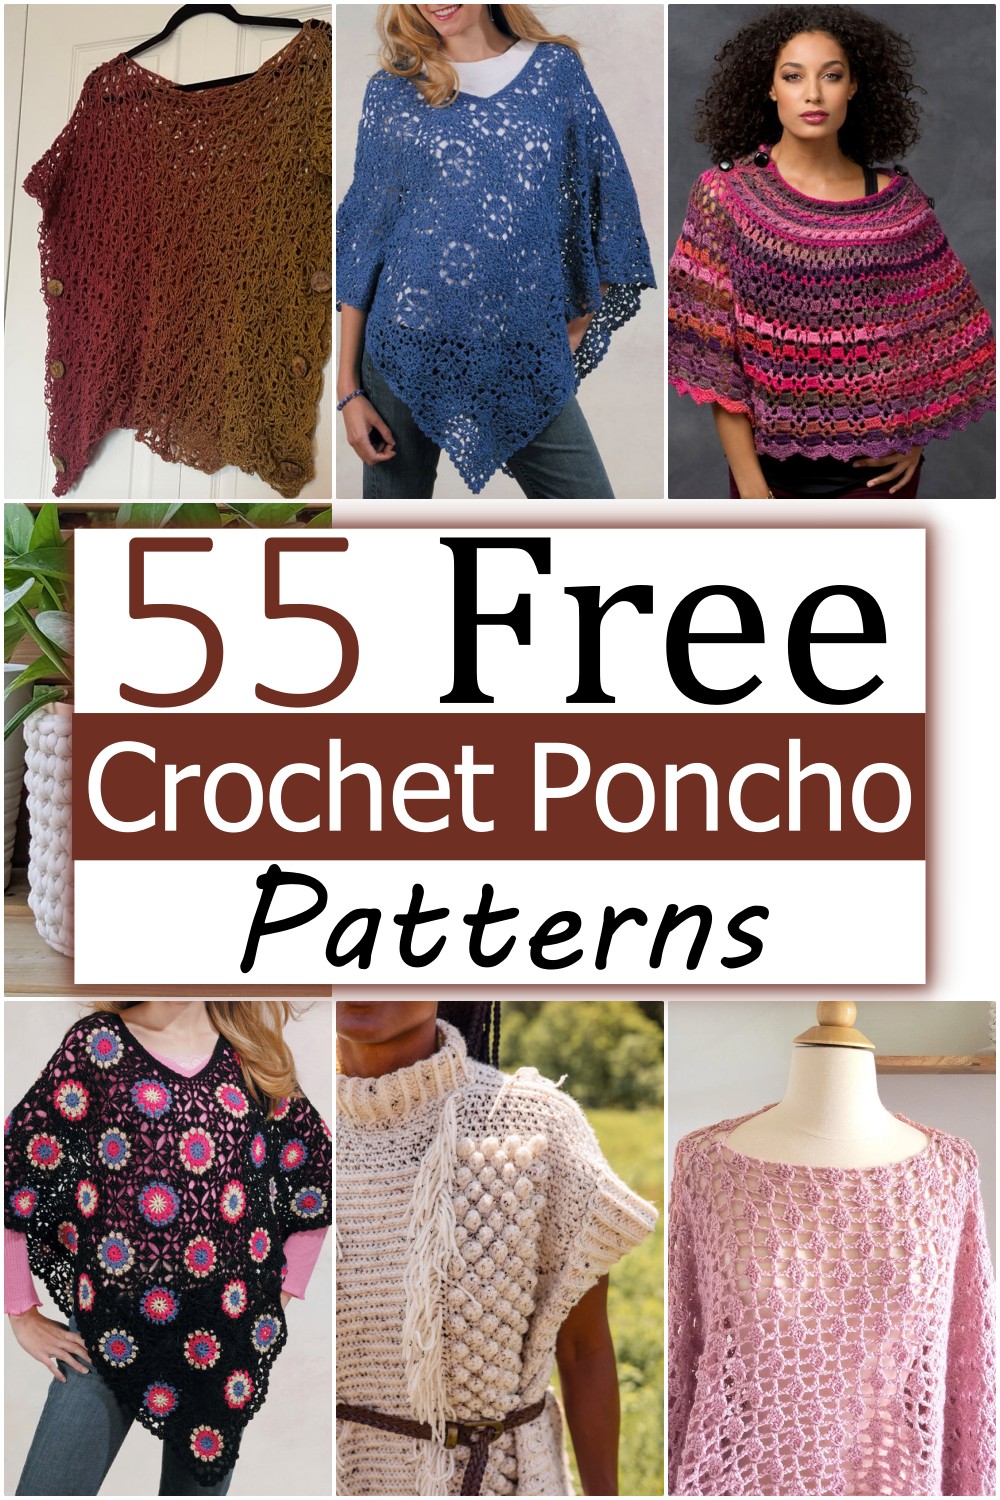 55 Free Crochet Poncho Patterns